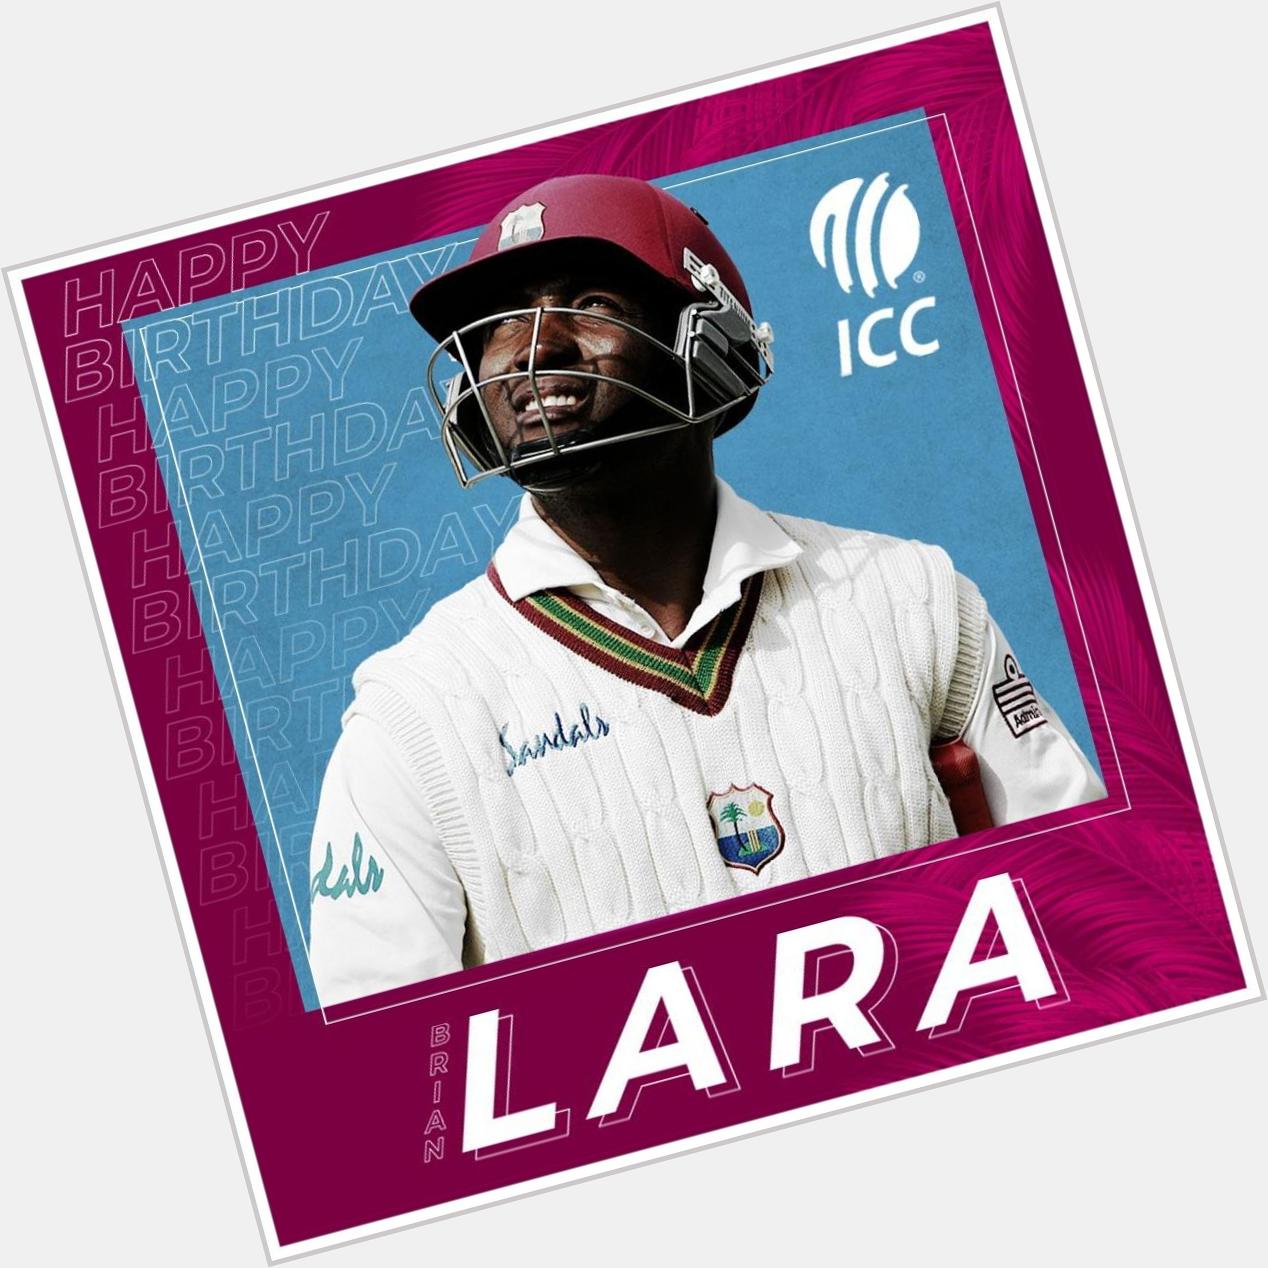 Happy birthday Brian lara sir..  Outstanding batsman 